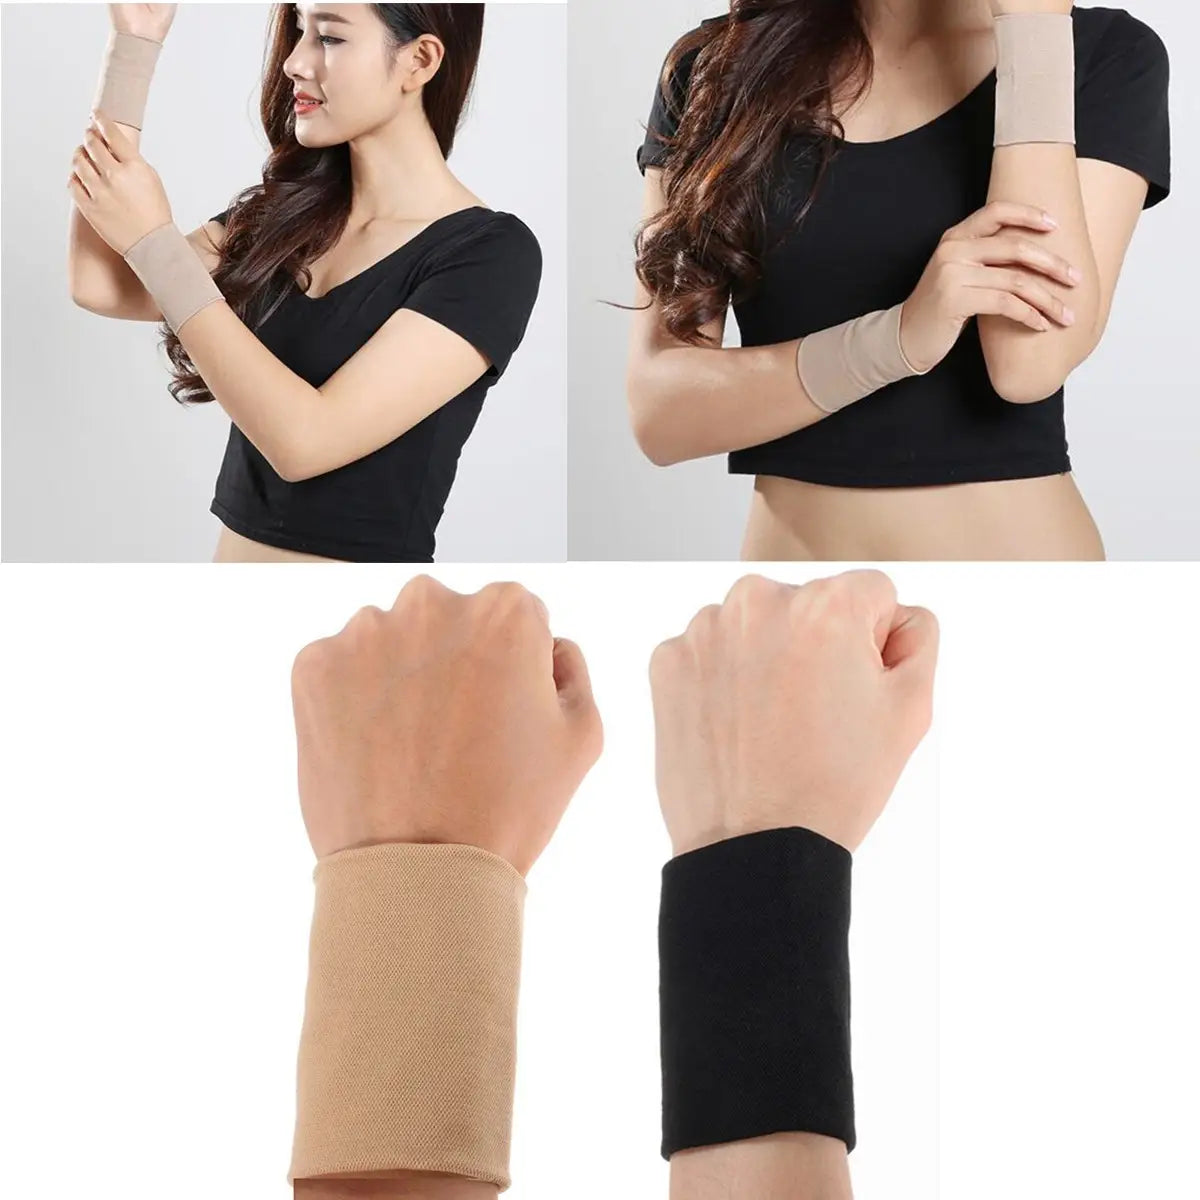 Breathable Hand Wrist Brace, Elastic Injury Protector